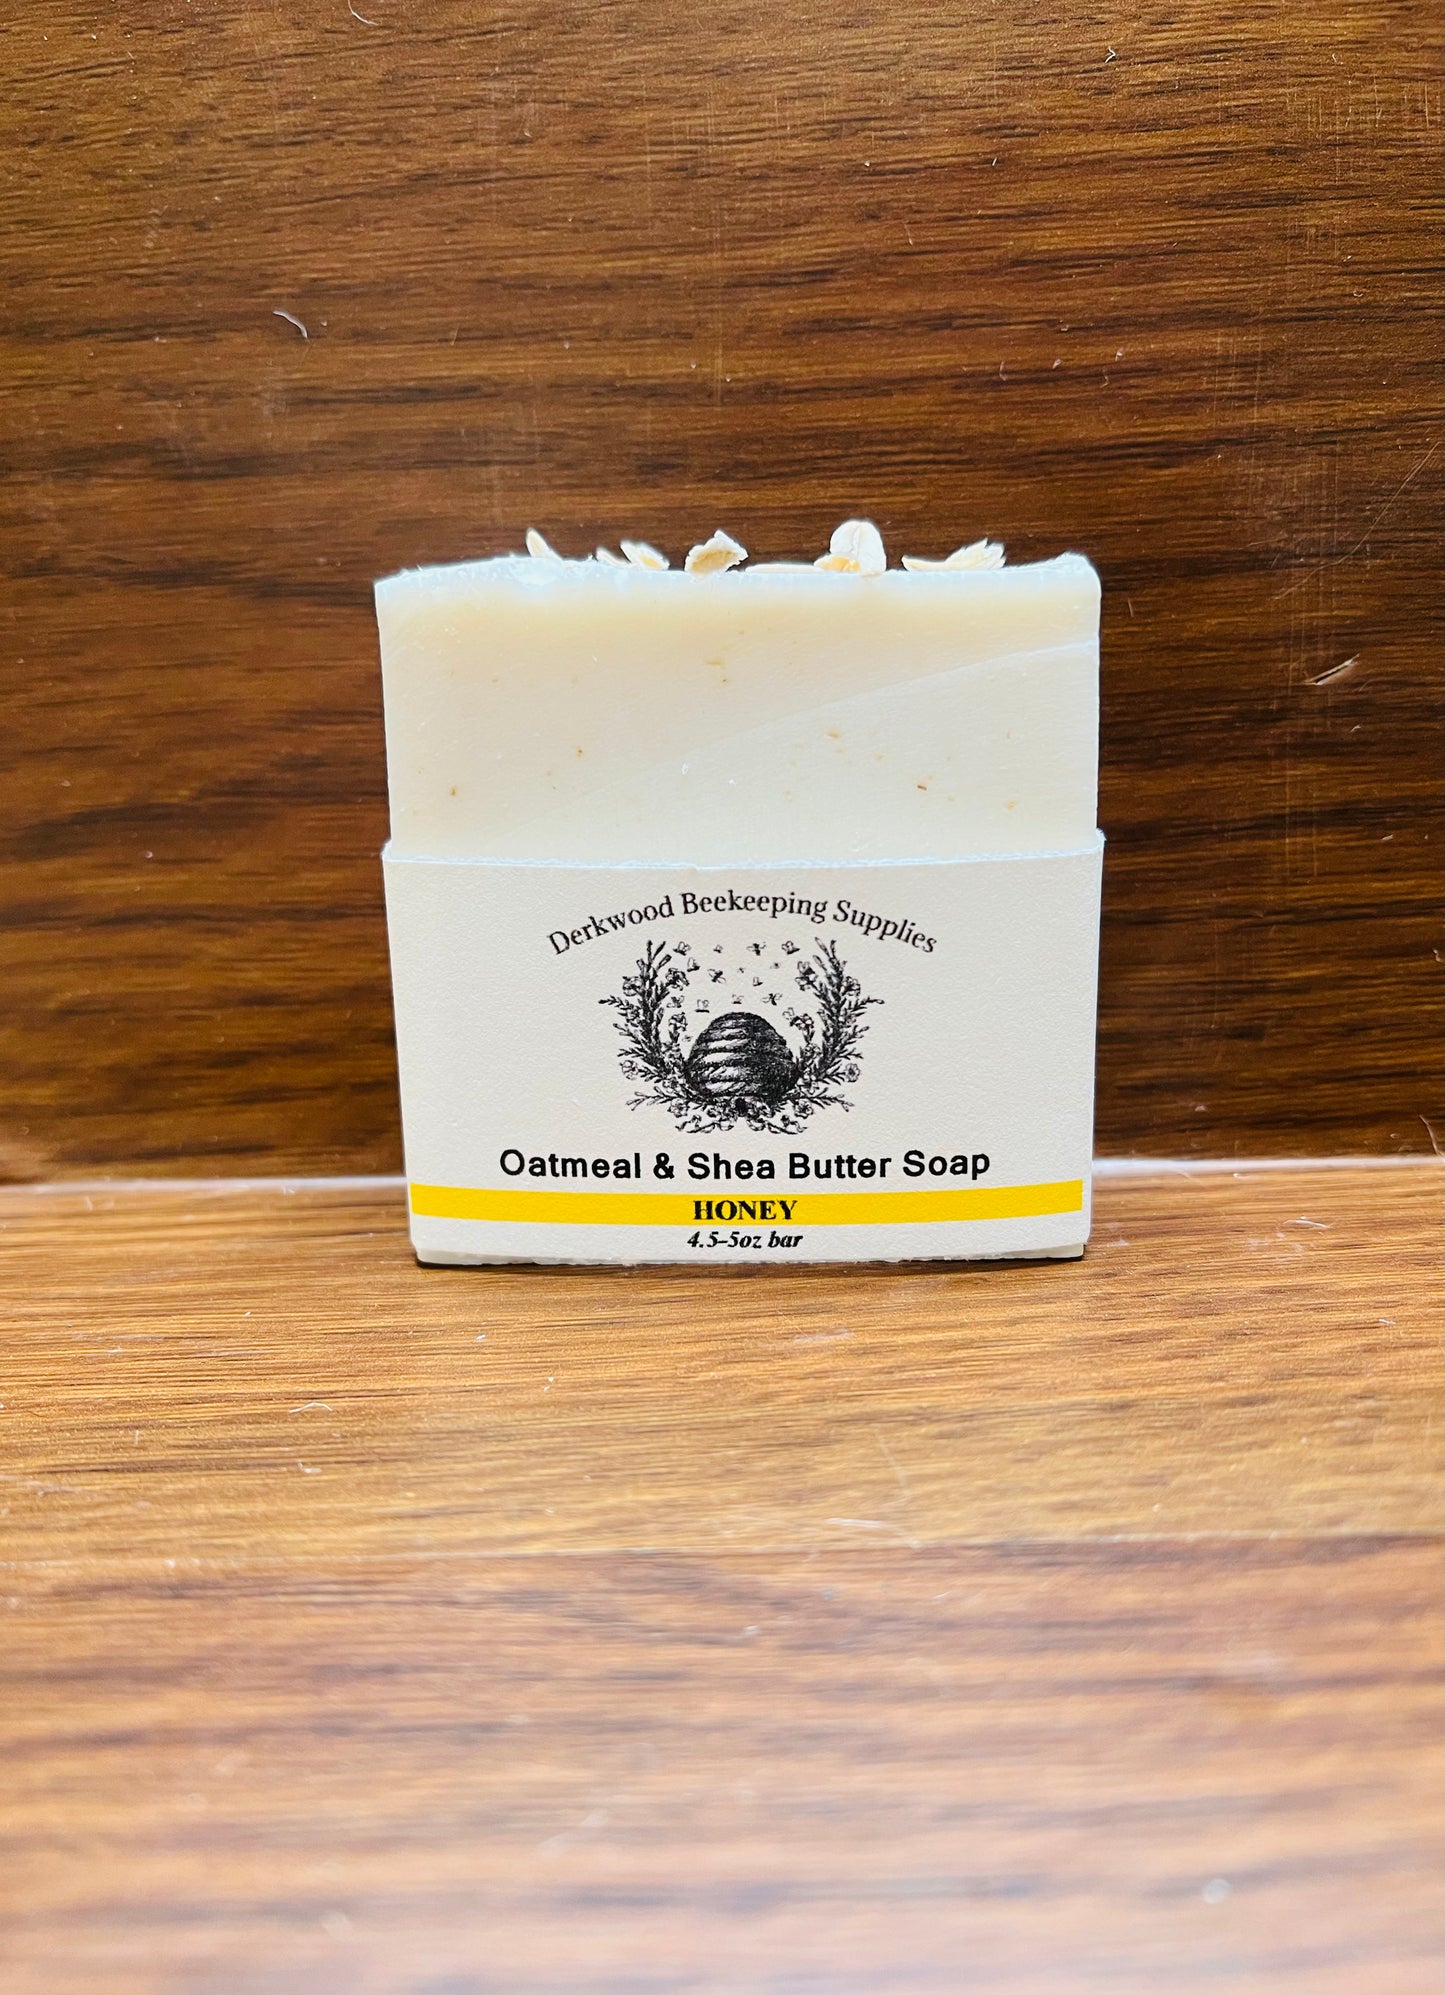 Oatmeal and Shea Butter Soap